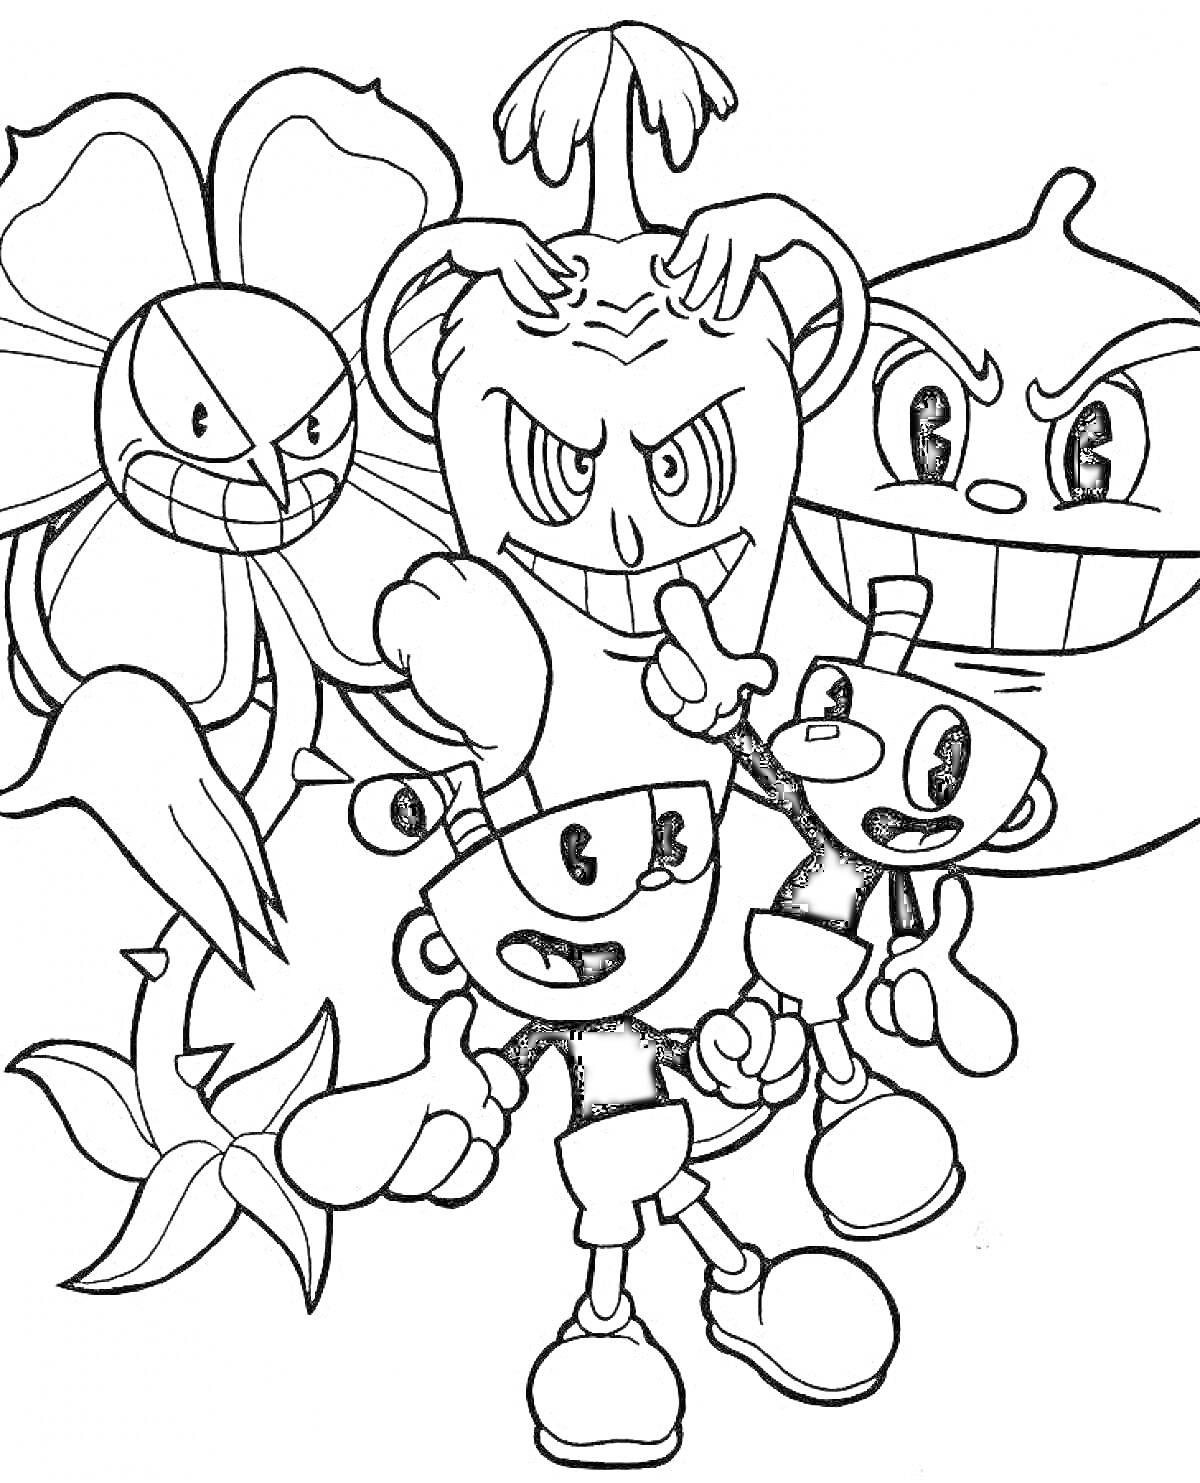 Раскраска Cuphead персонажи с боссами - цветок, луковица, картофель, Cuphead и Mugman